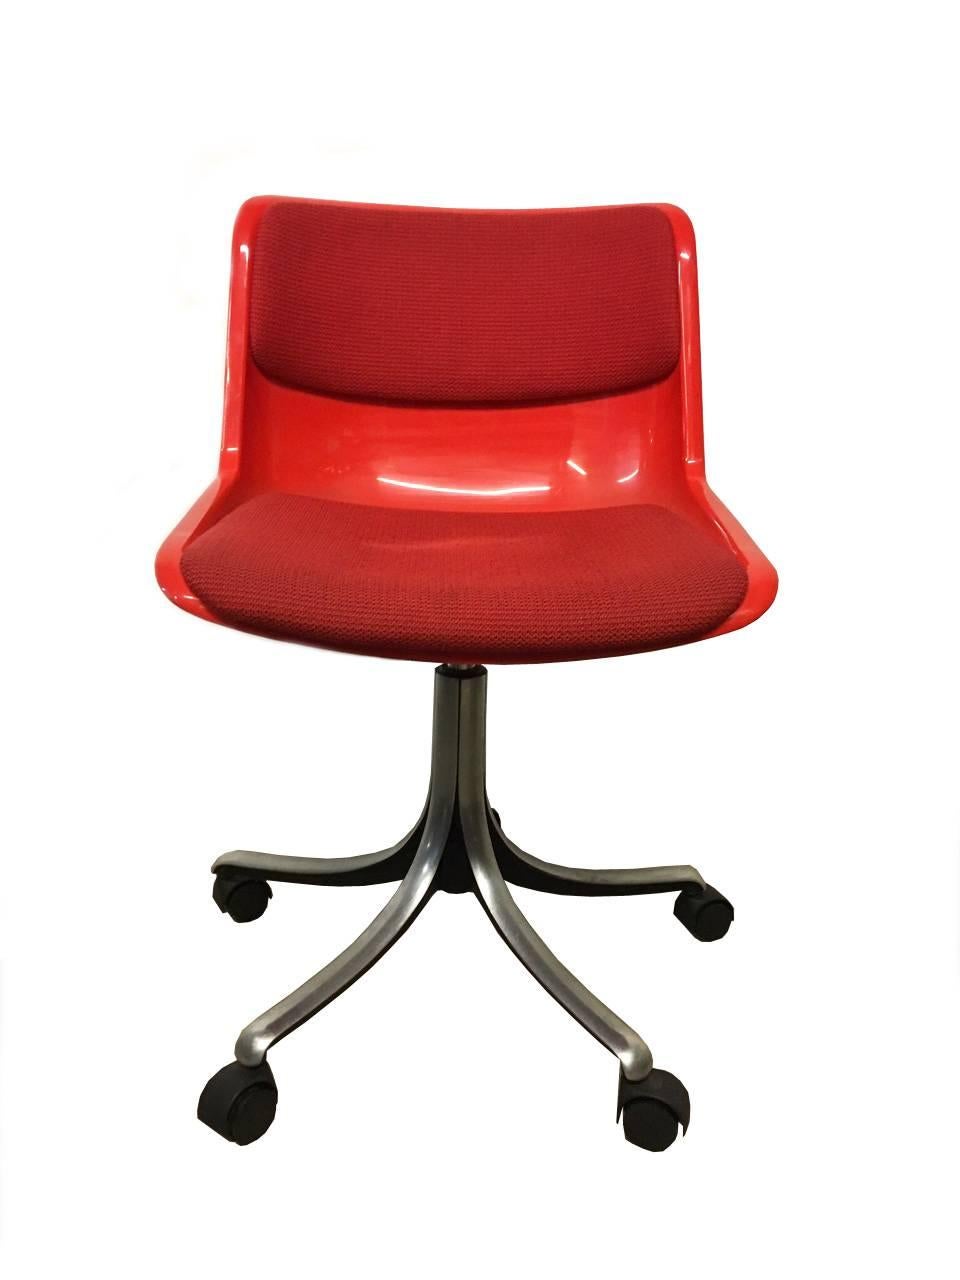 Italian Tecno Modus Chairs Designed by Osvaldo Borsani